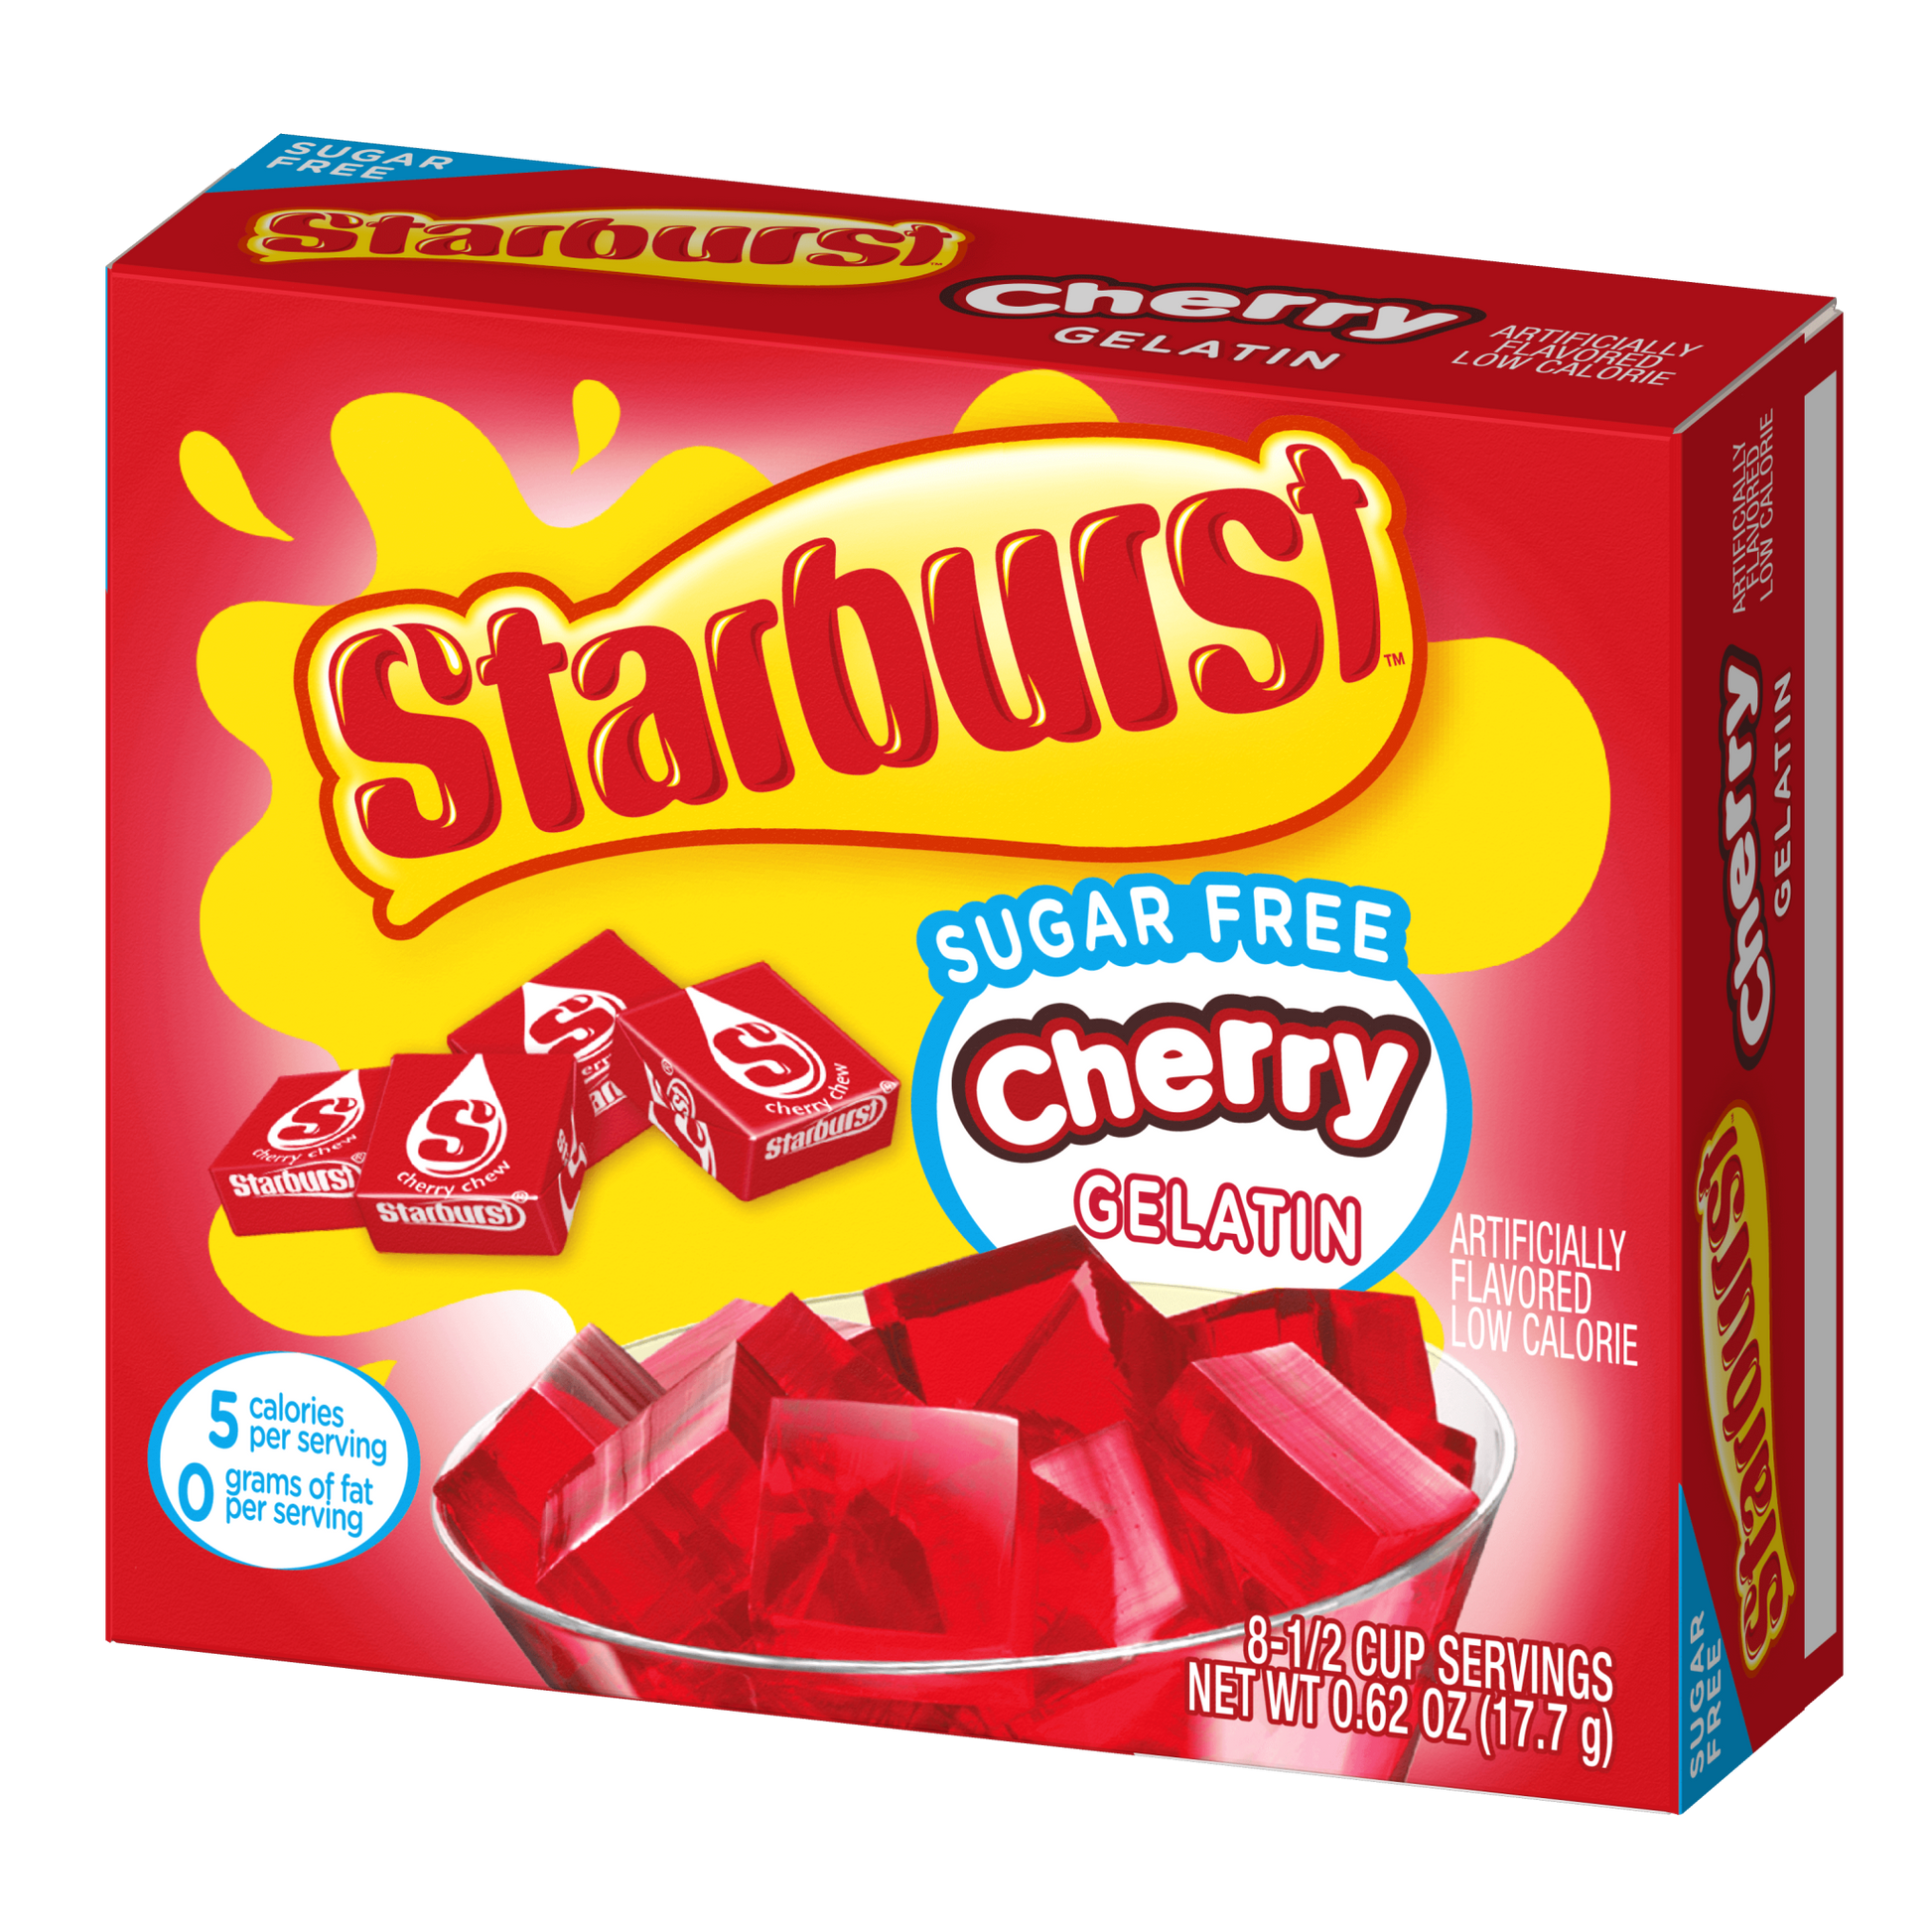 Starburst cherry sugar-free gelatin packaging